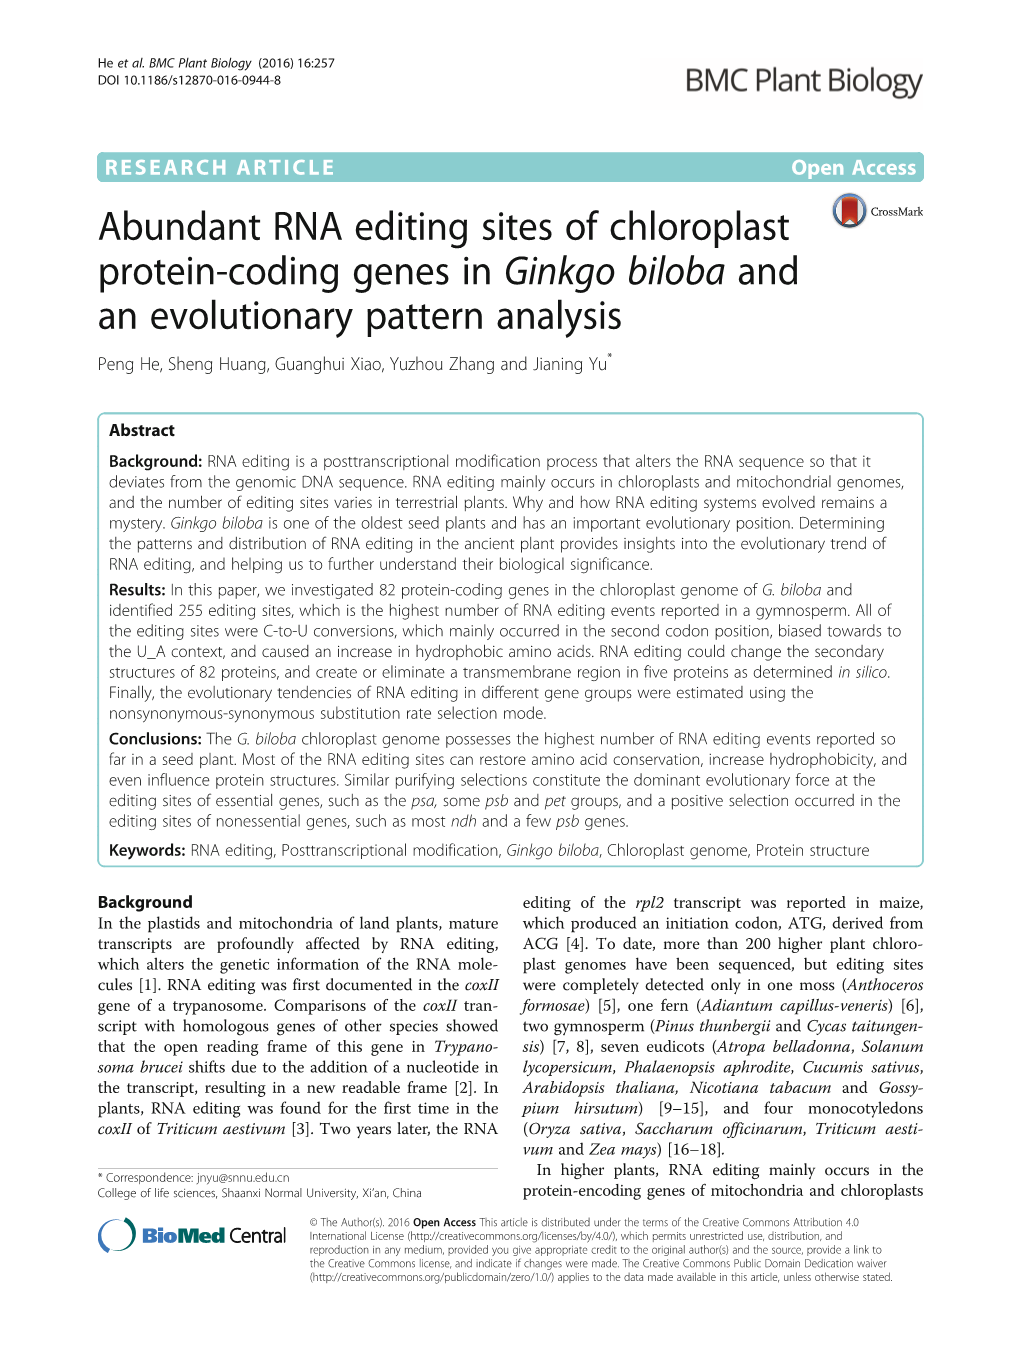 Abundant RNA Editing Sites of Chloroplast Protein-Coding Genes In